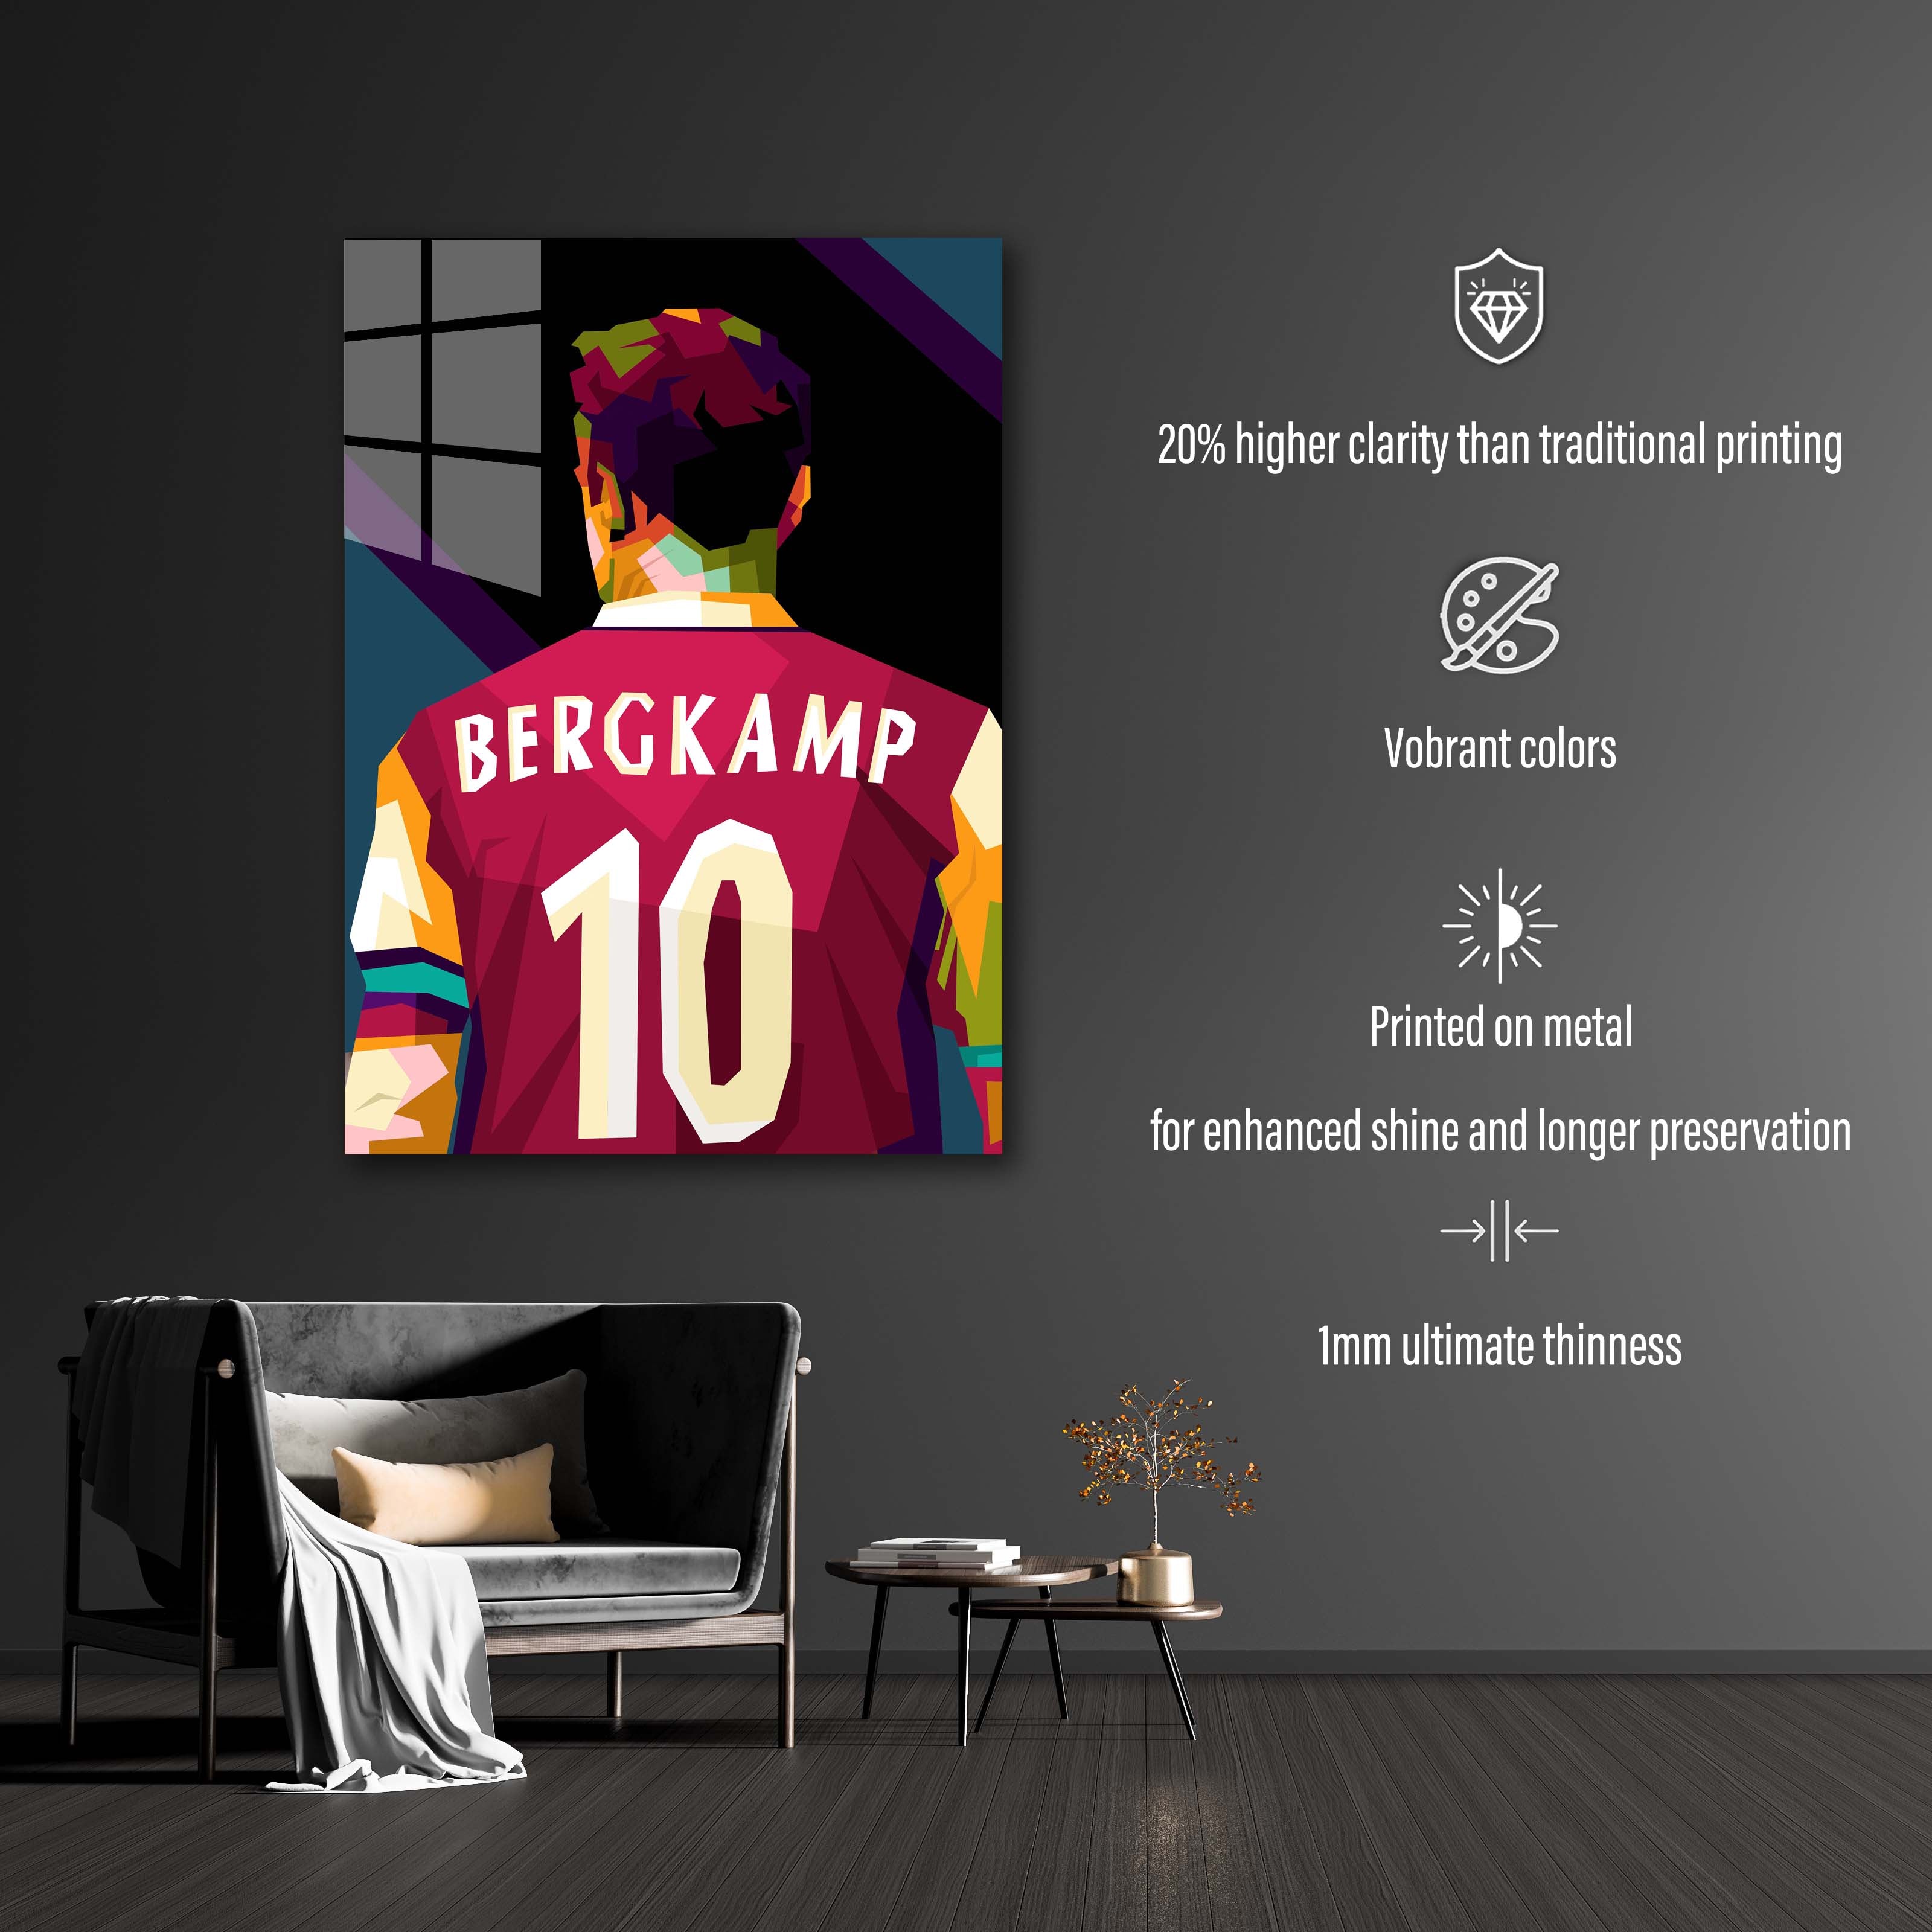 Dennis Bergkamp in legend football wpap pop art-designed by @Amirudin kosong enam